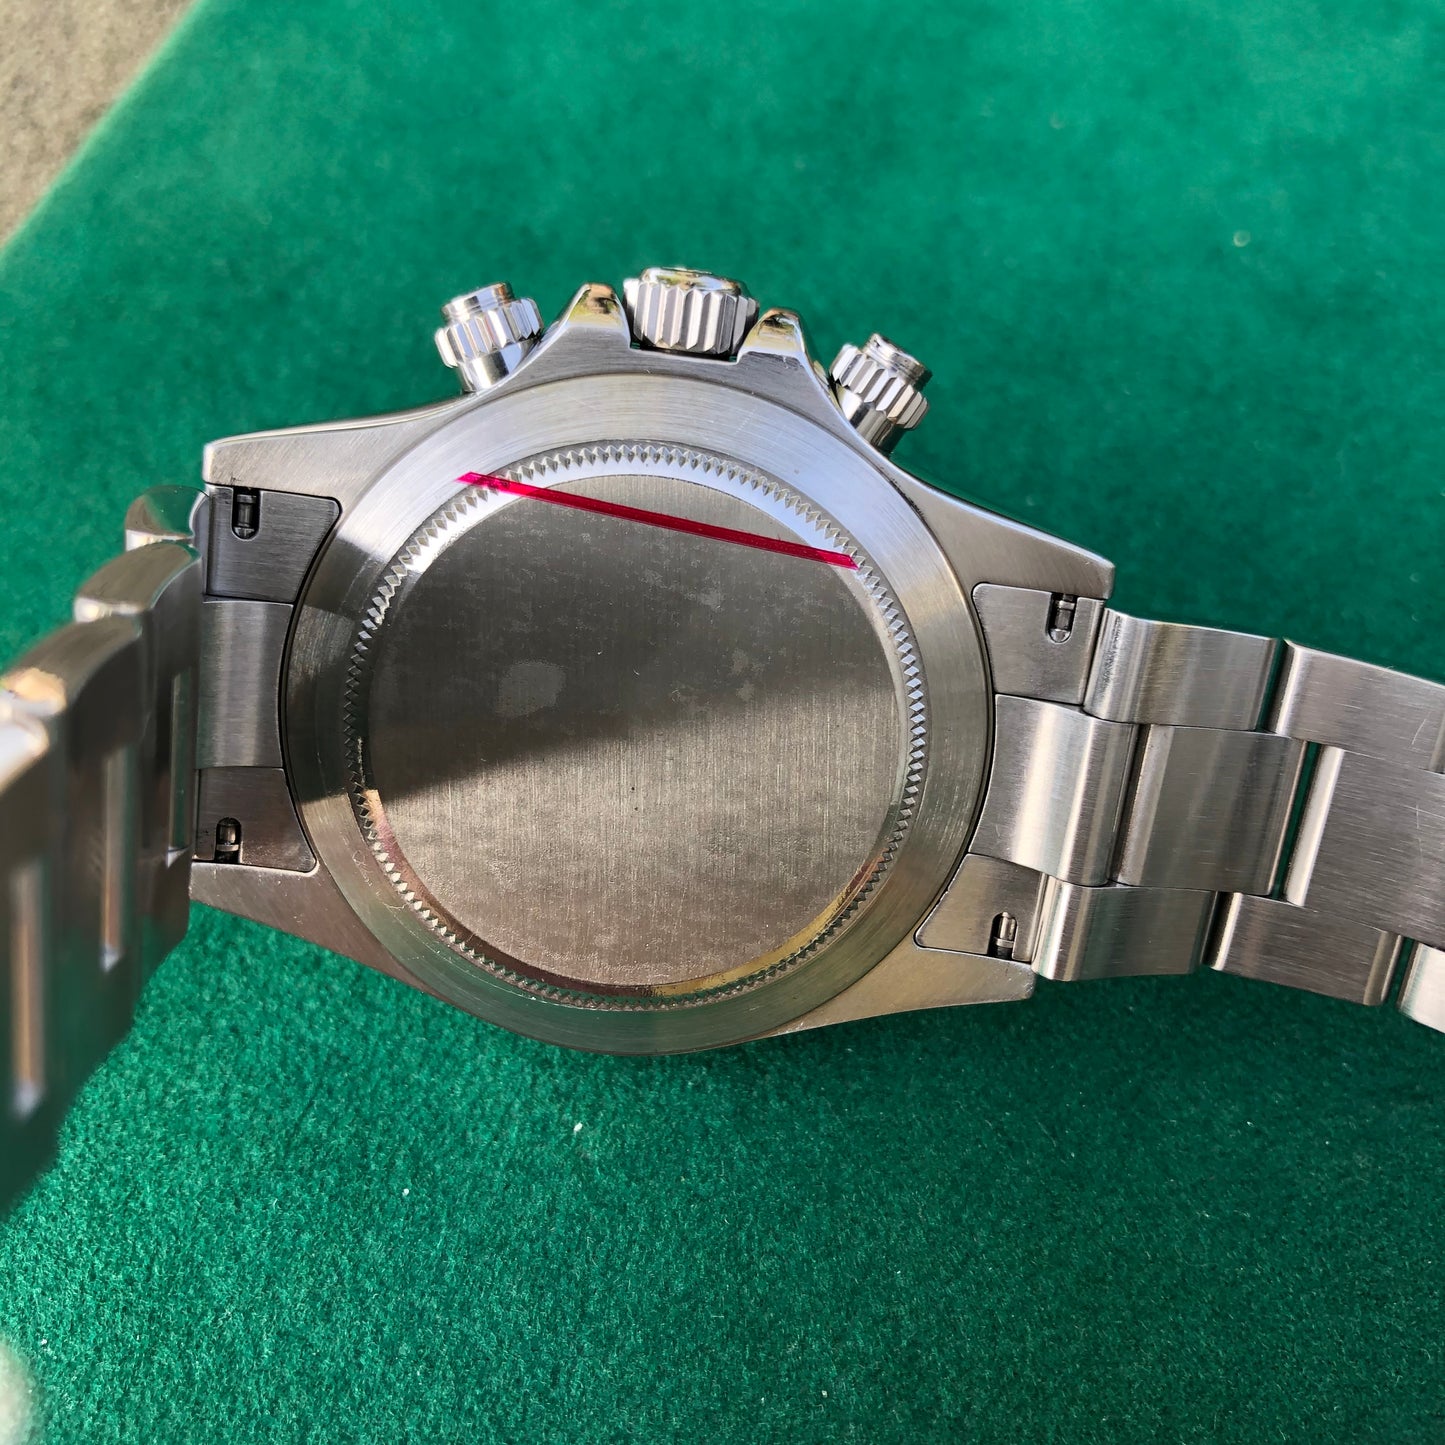 Rolex Daytona Cosmograph 116520 White Steel Automatic Chronograph 2008 Rehaut Box Papers - Hashtag Watch Company